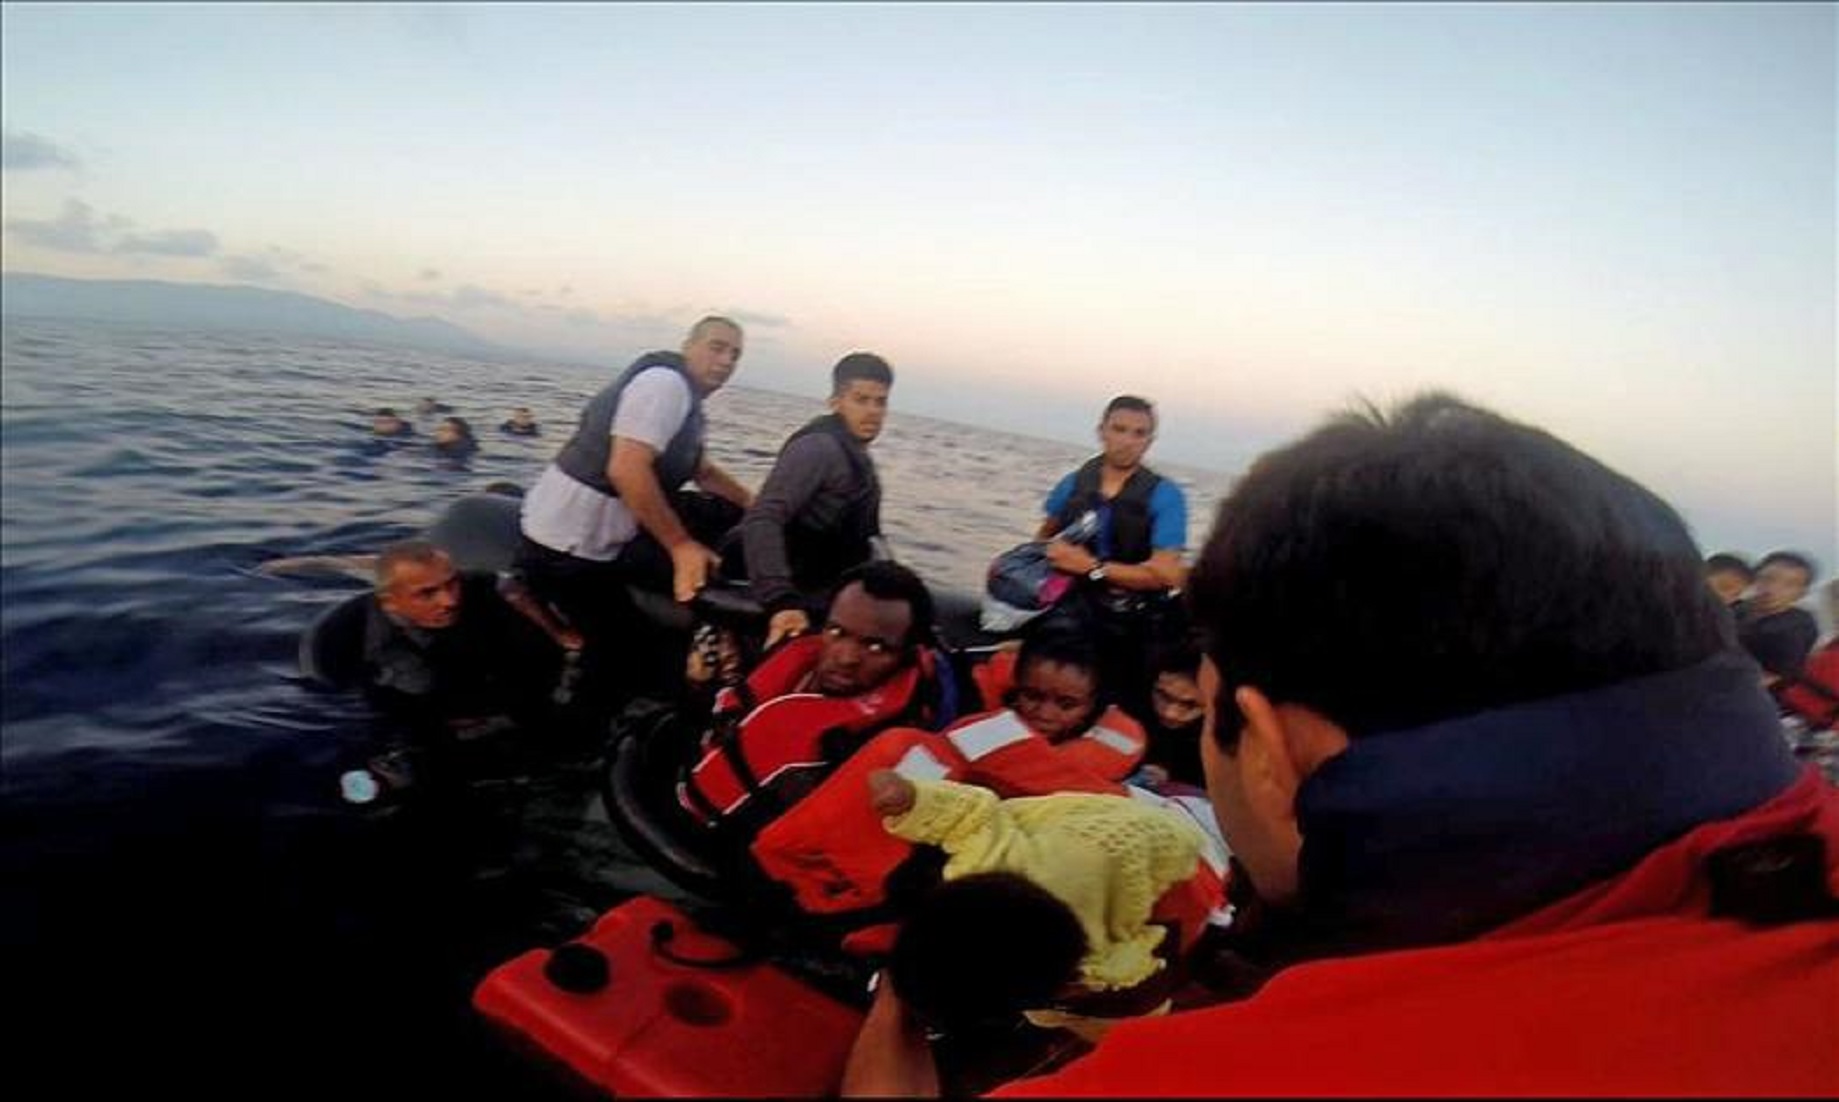 81 Illegal Immigrants Rescued Off SE Tunisia